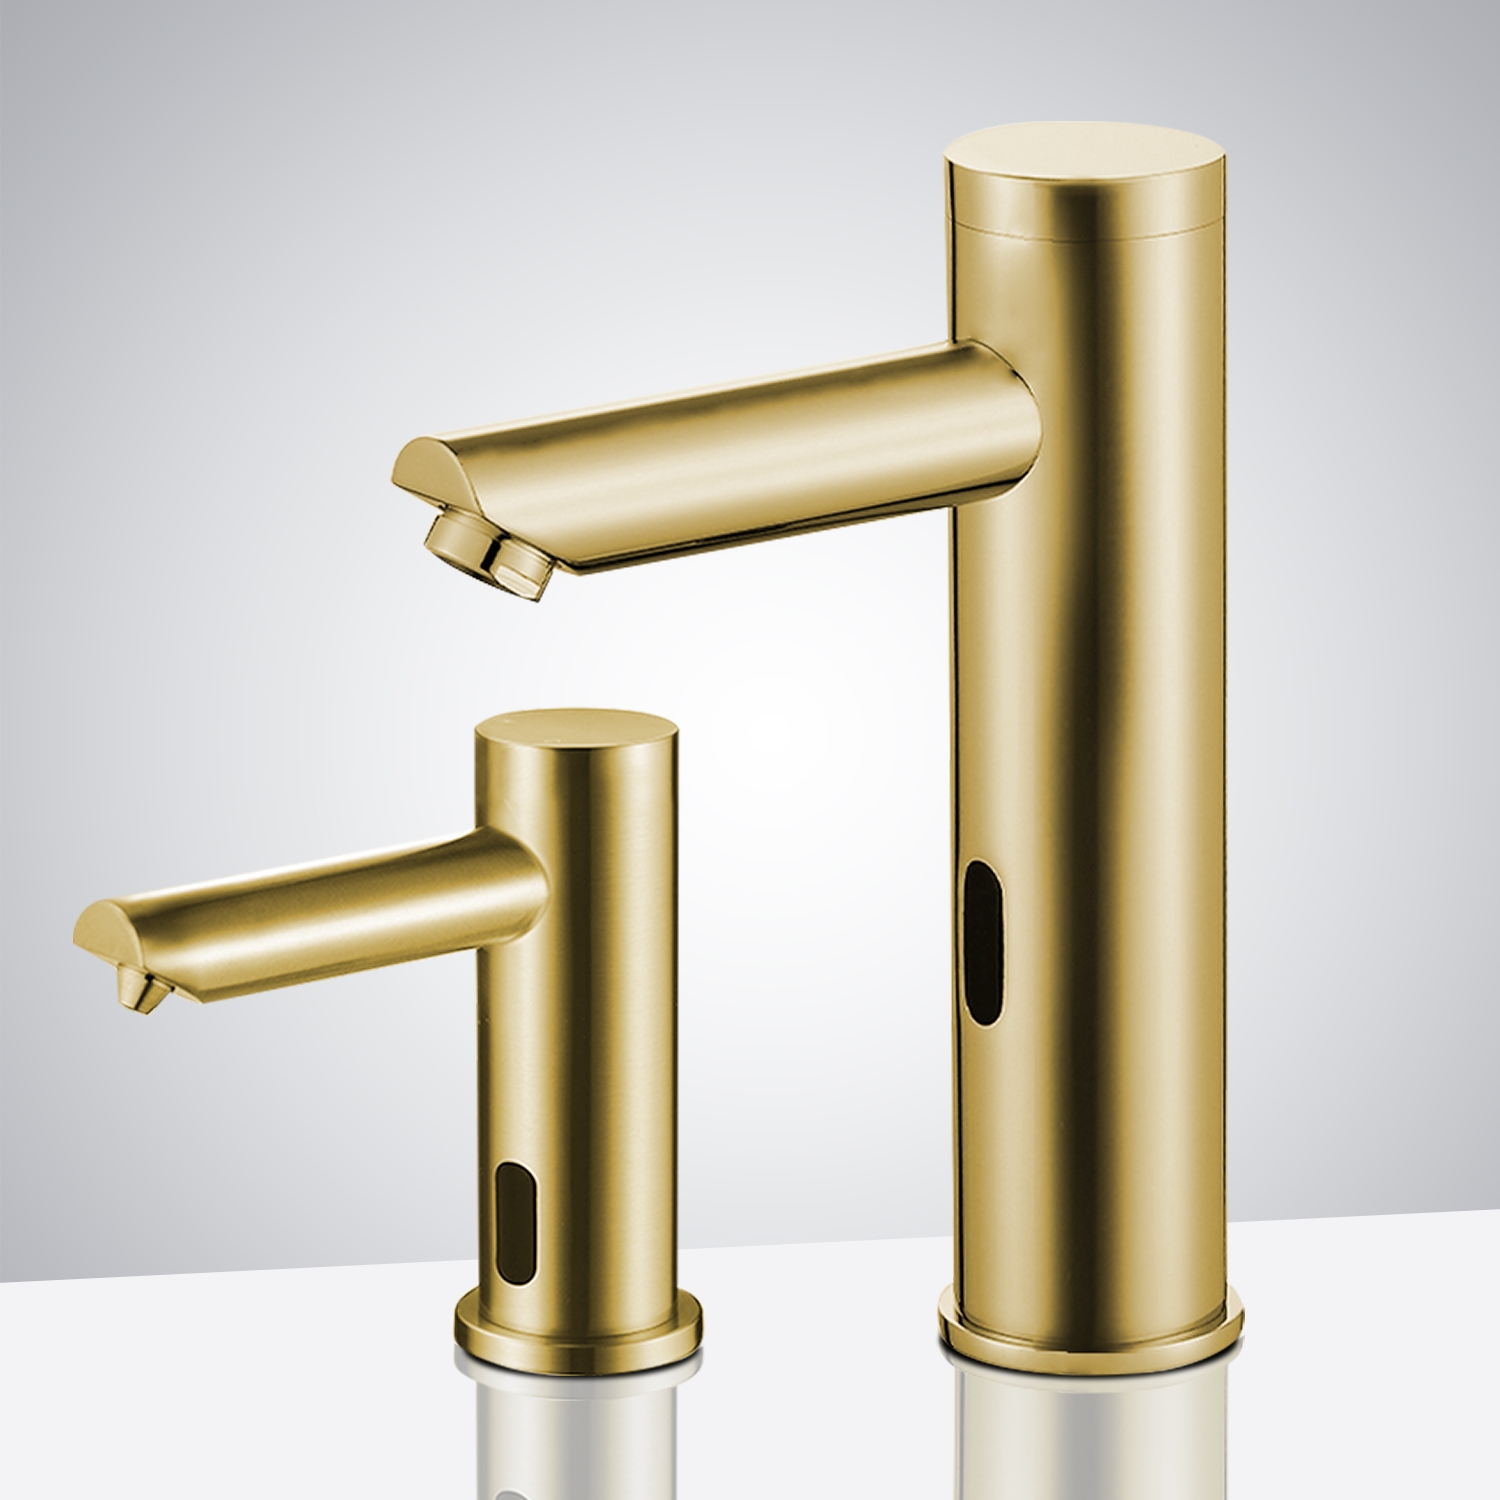 Fontana Motion Sensor Faucet & Automatic Sensor Liquid Soap Dispenser Brushed Gold